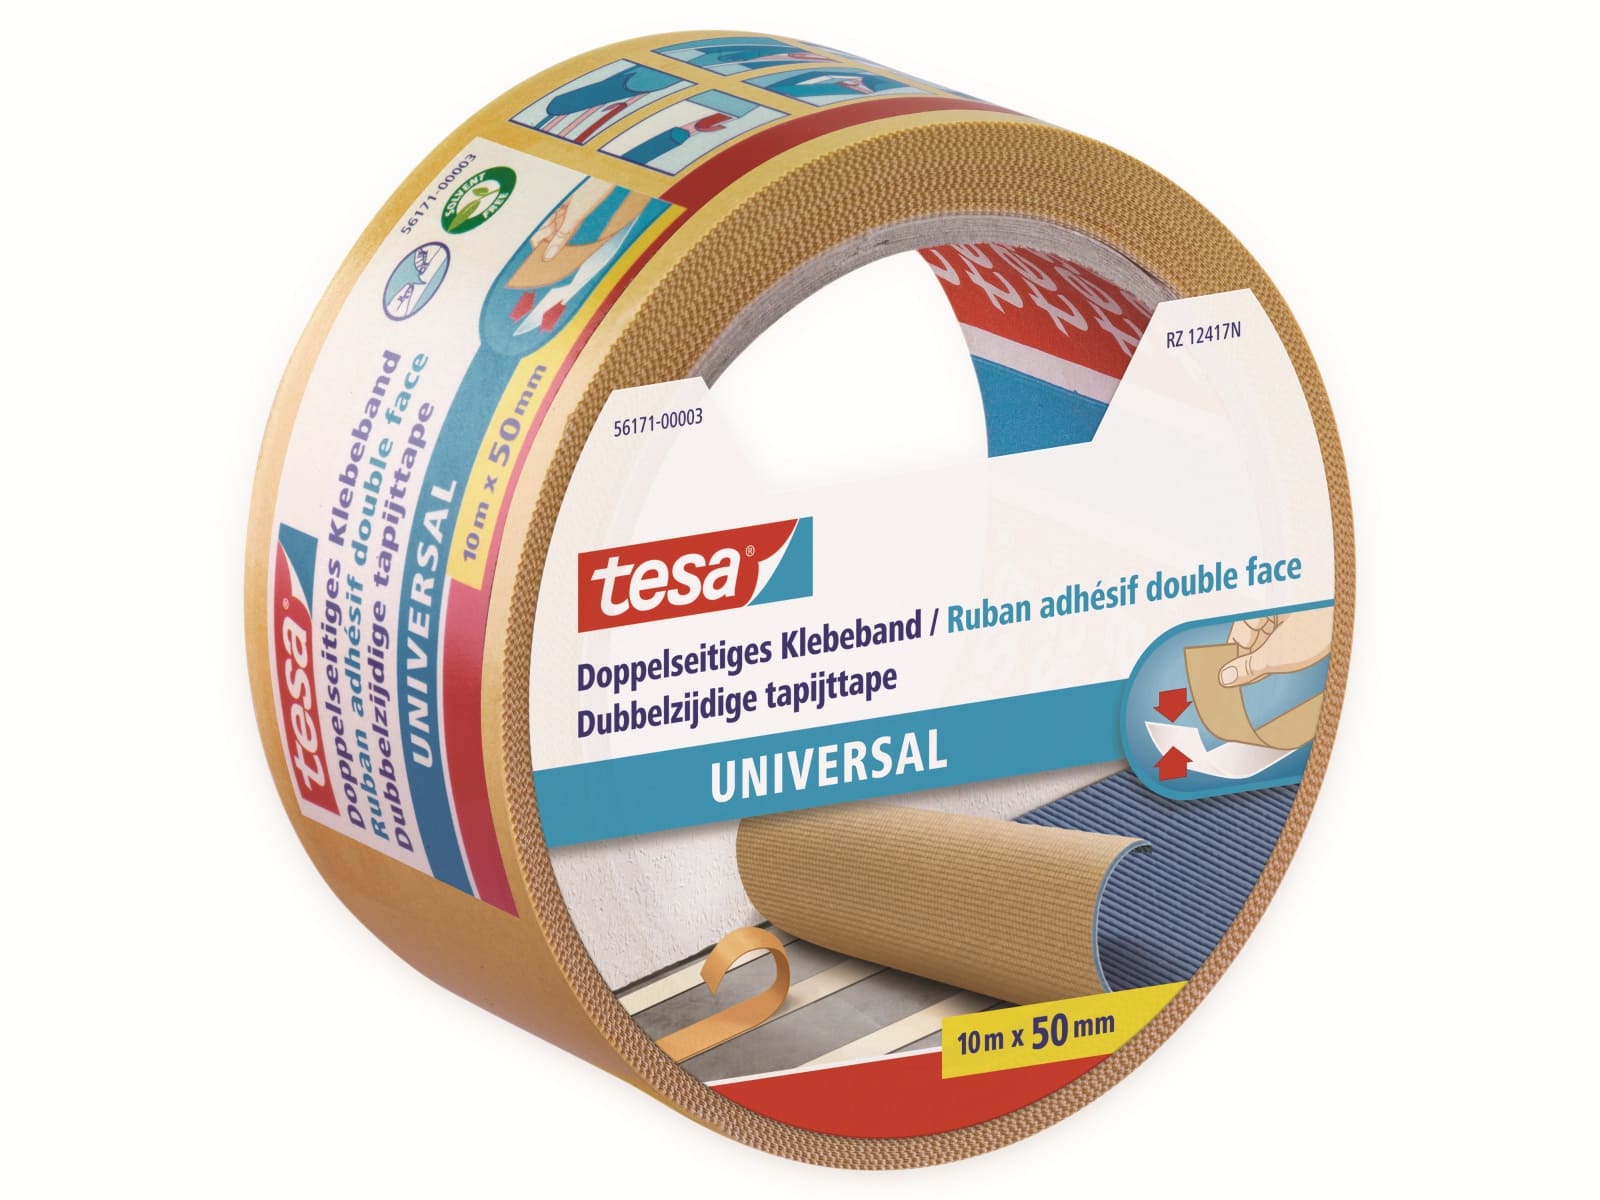 TESA ® Doppelseitiges Klebeband, universal, 10m:50mm, 56171-00003-11